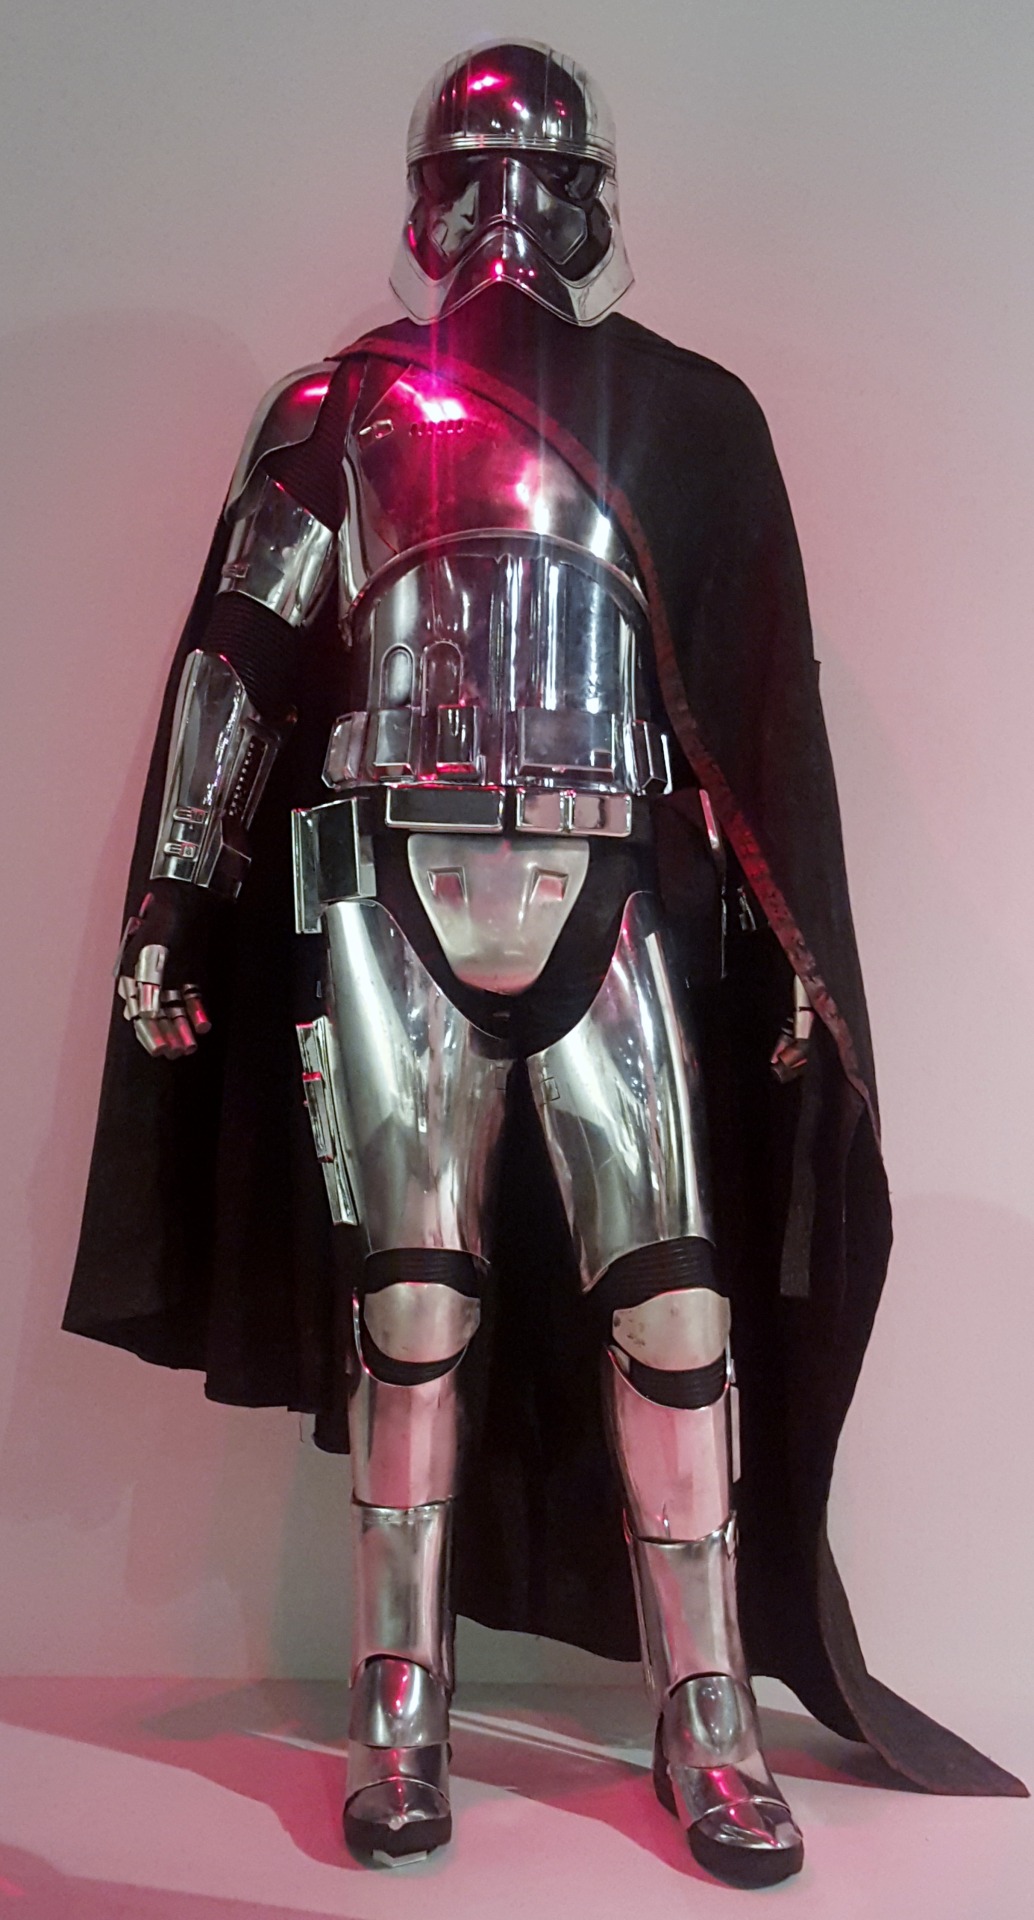 Hot Damneron Captain Phasmas Armor From The Fidm Exhibit In